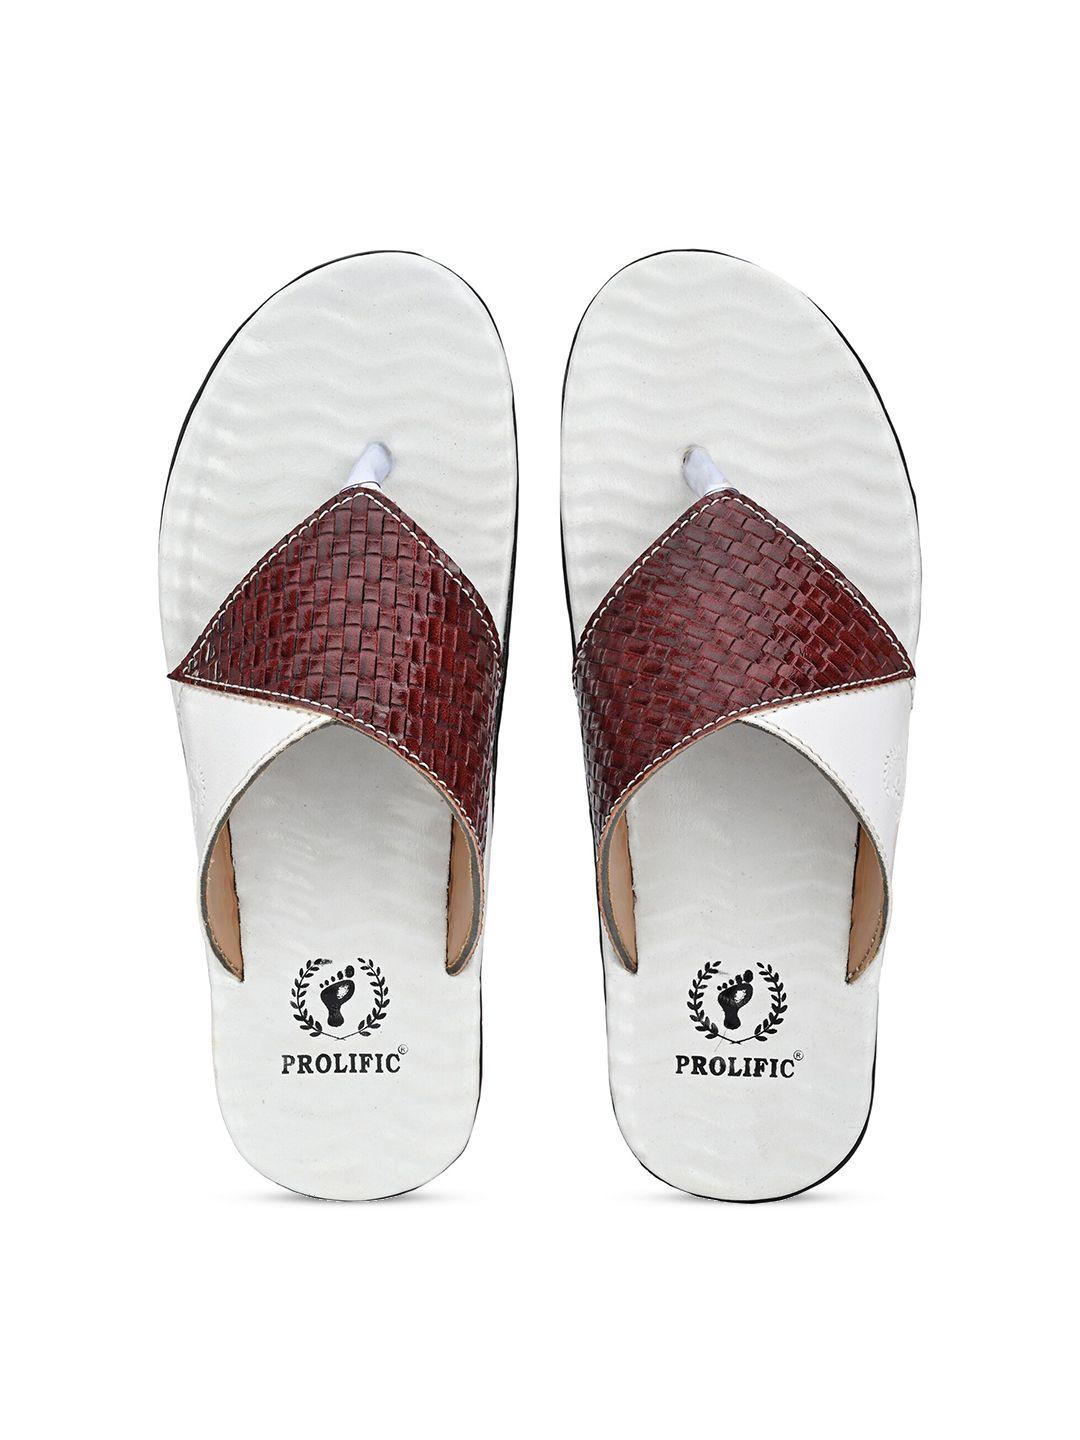 prolific men brown & white basketweave textured comfort sandals